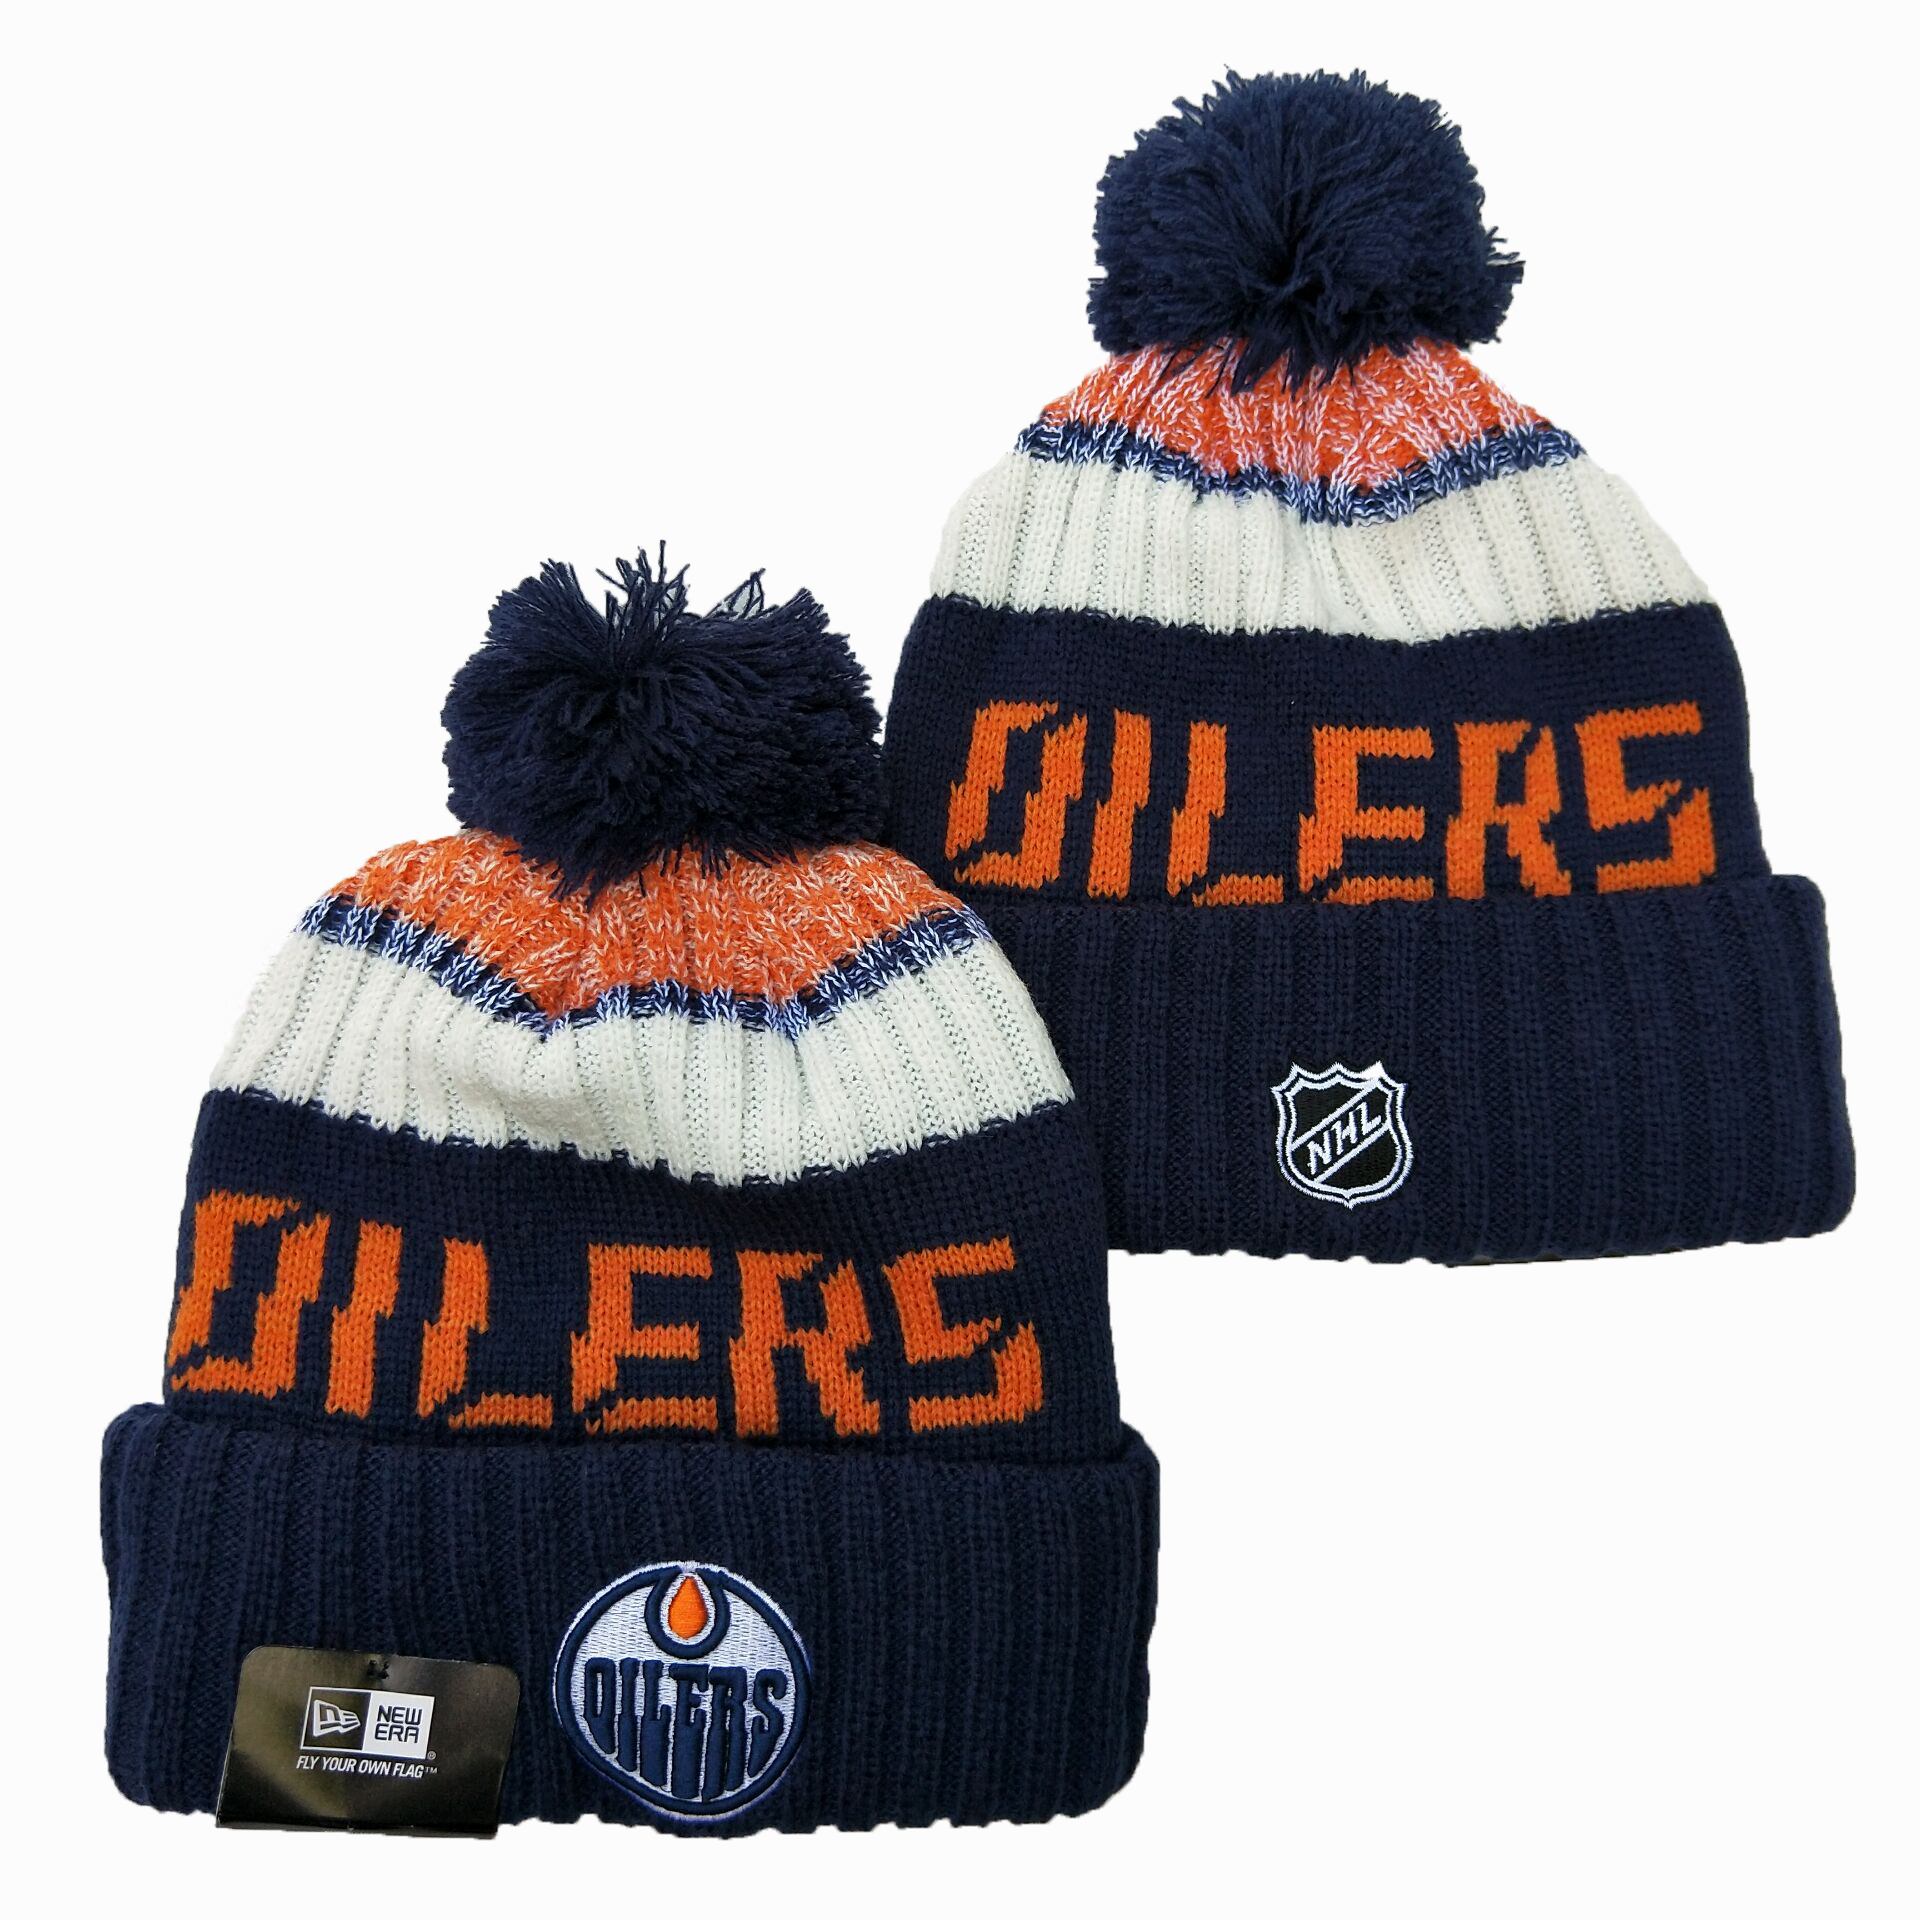 Edmonton Oilers Knit Hats 001